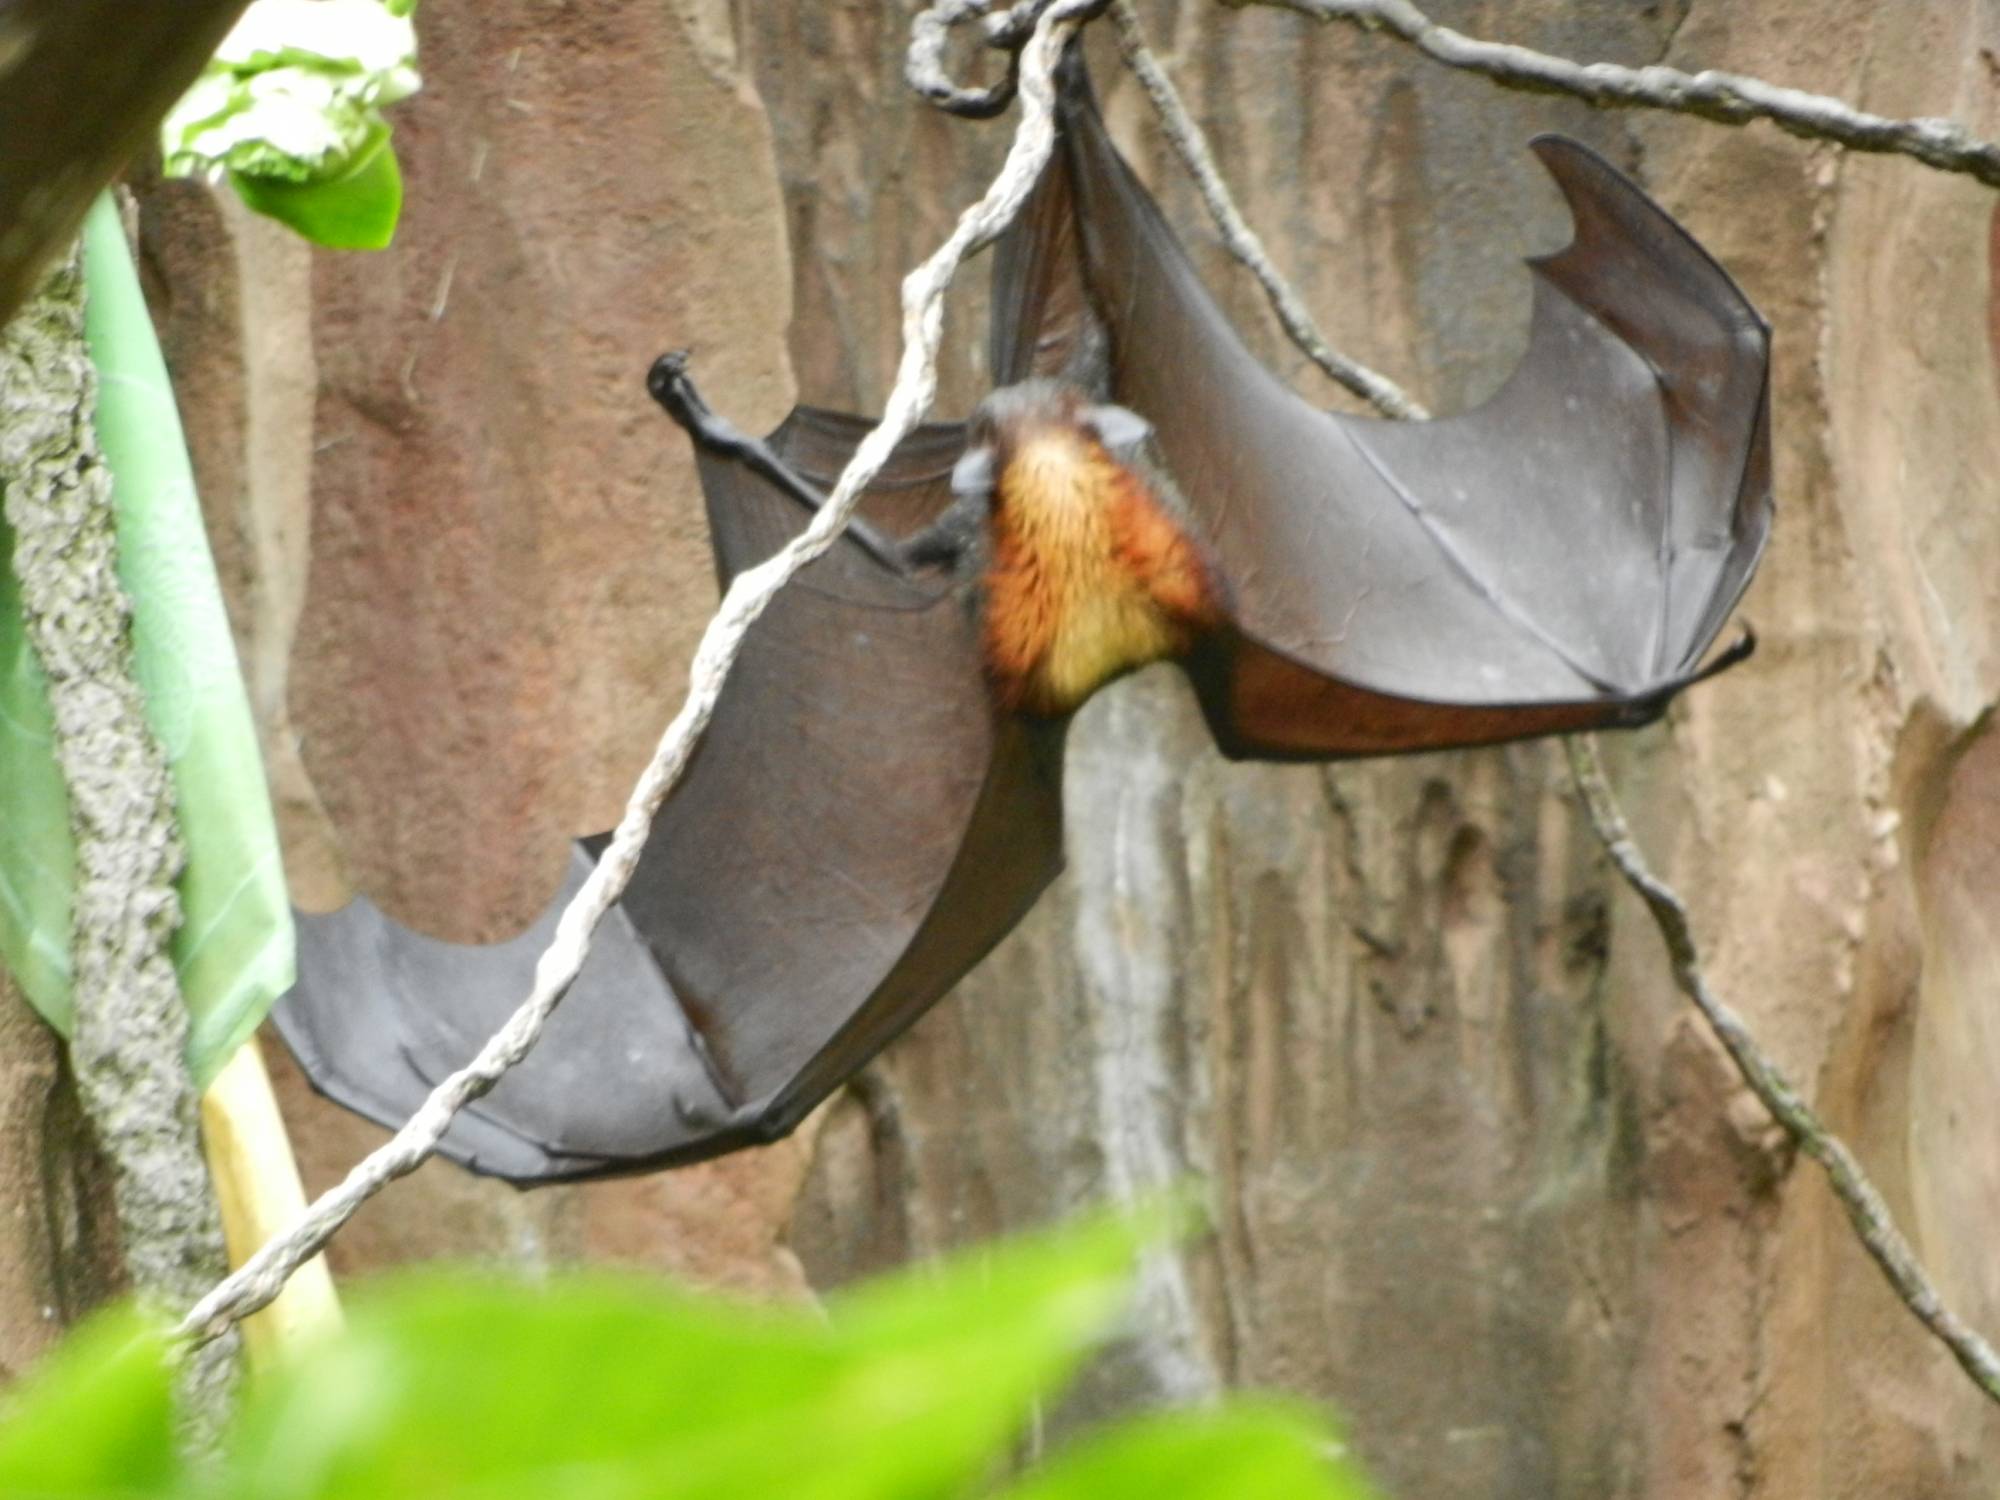 Giant Fruit Bat spreading wings